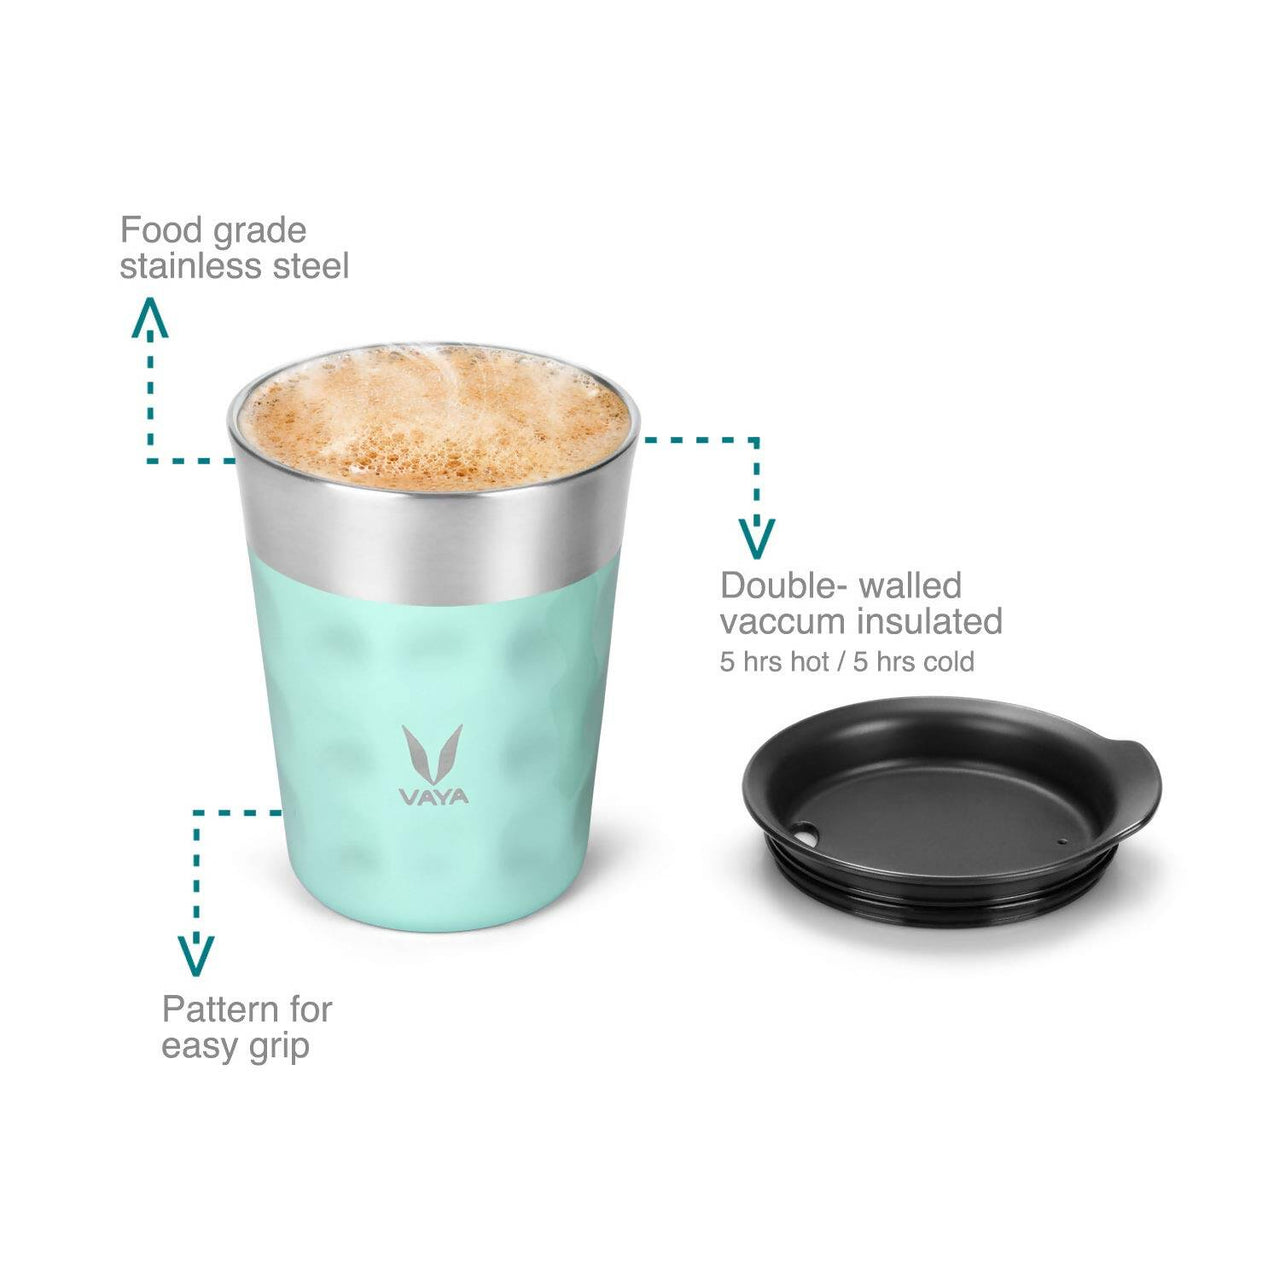 Vaya Popcup Insulated Coffee Mug Tumbler With Lid - 250 ml (Cool Cyan) - Distacart